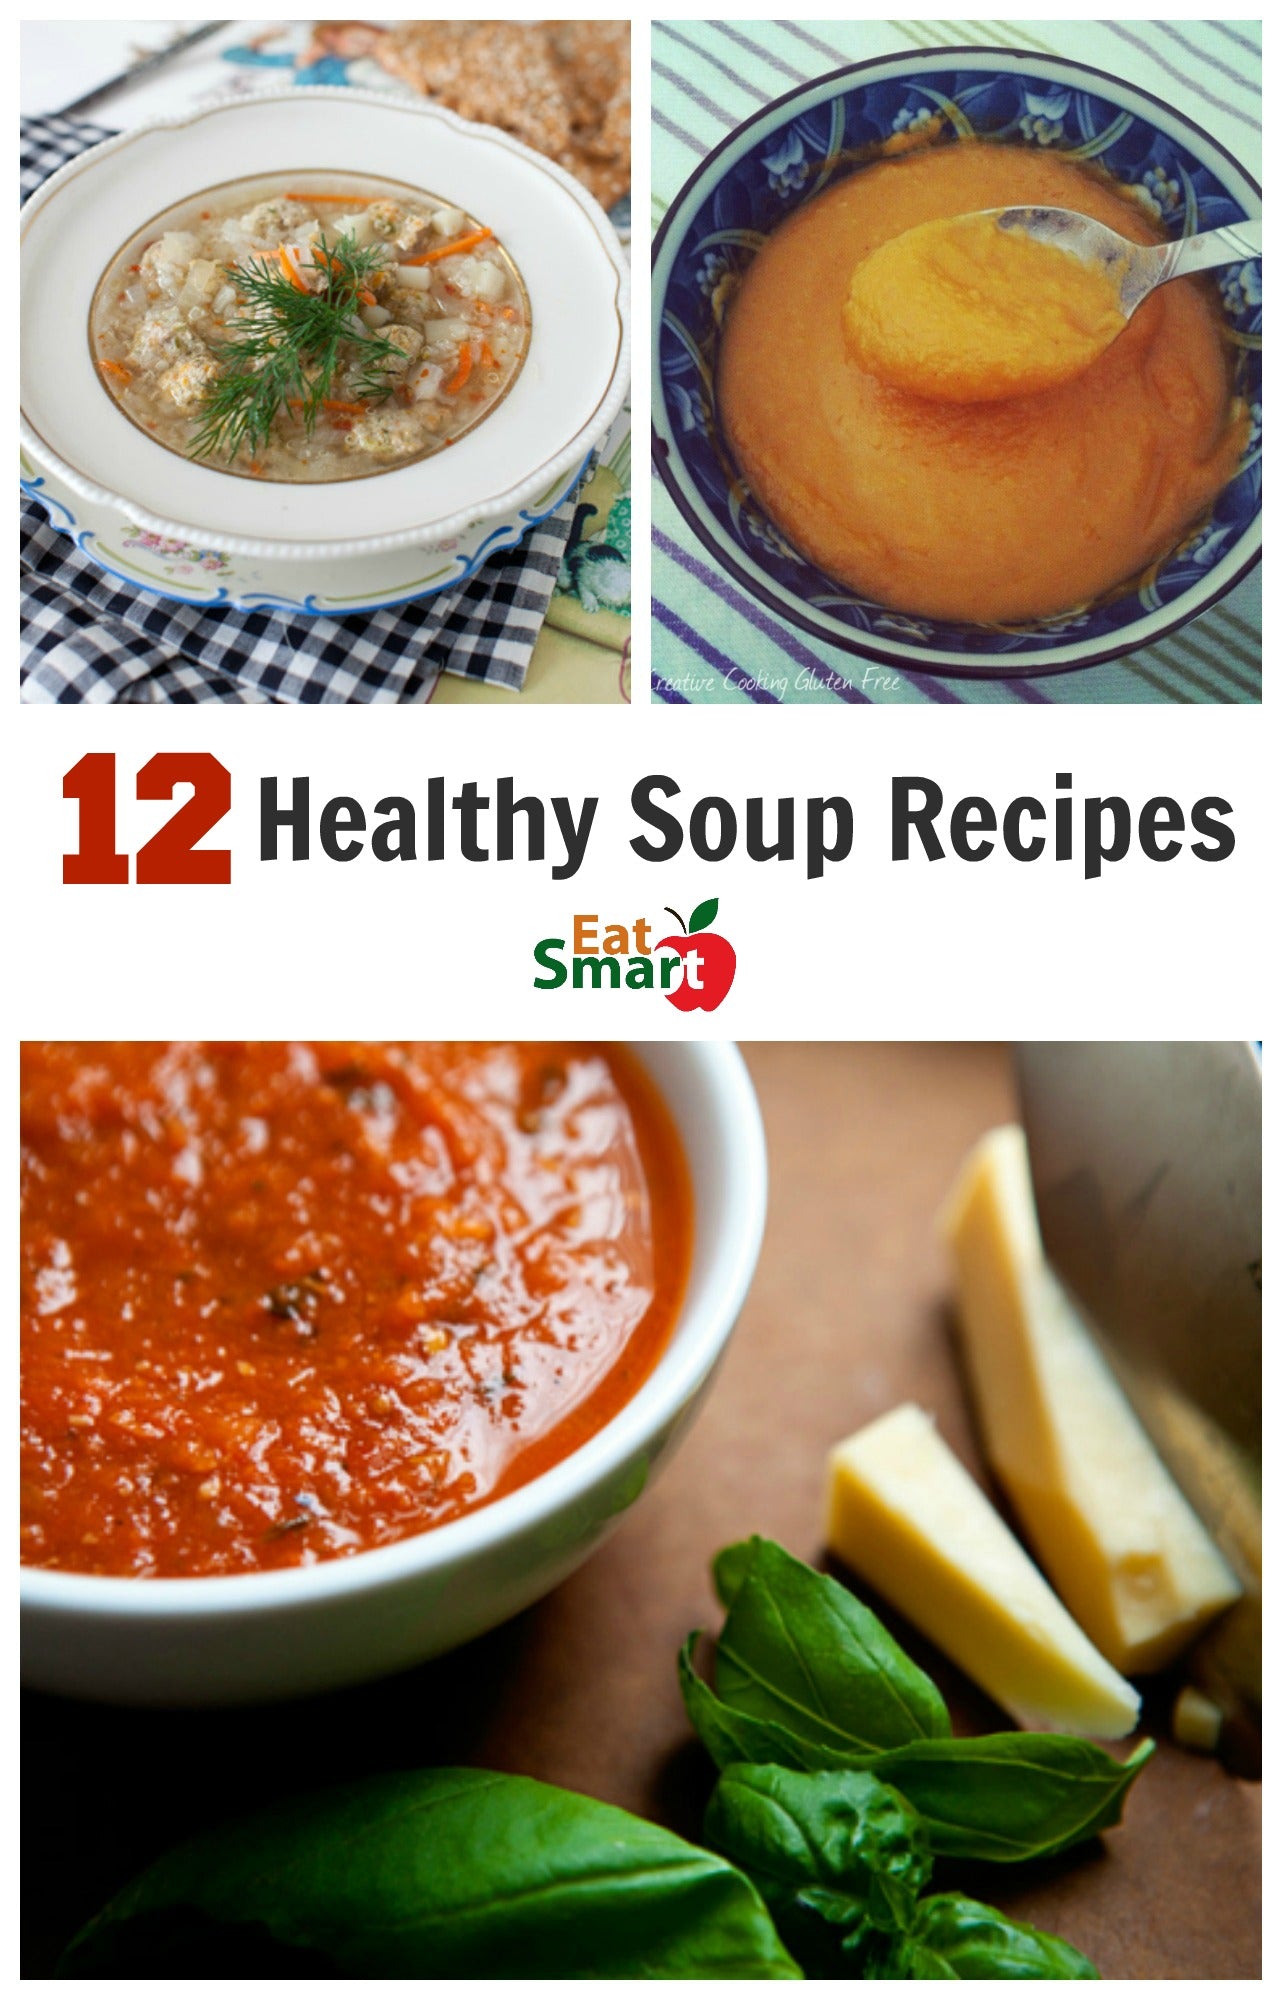 12 Healthy Soup Recipes – Eat Smart